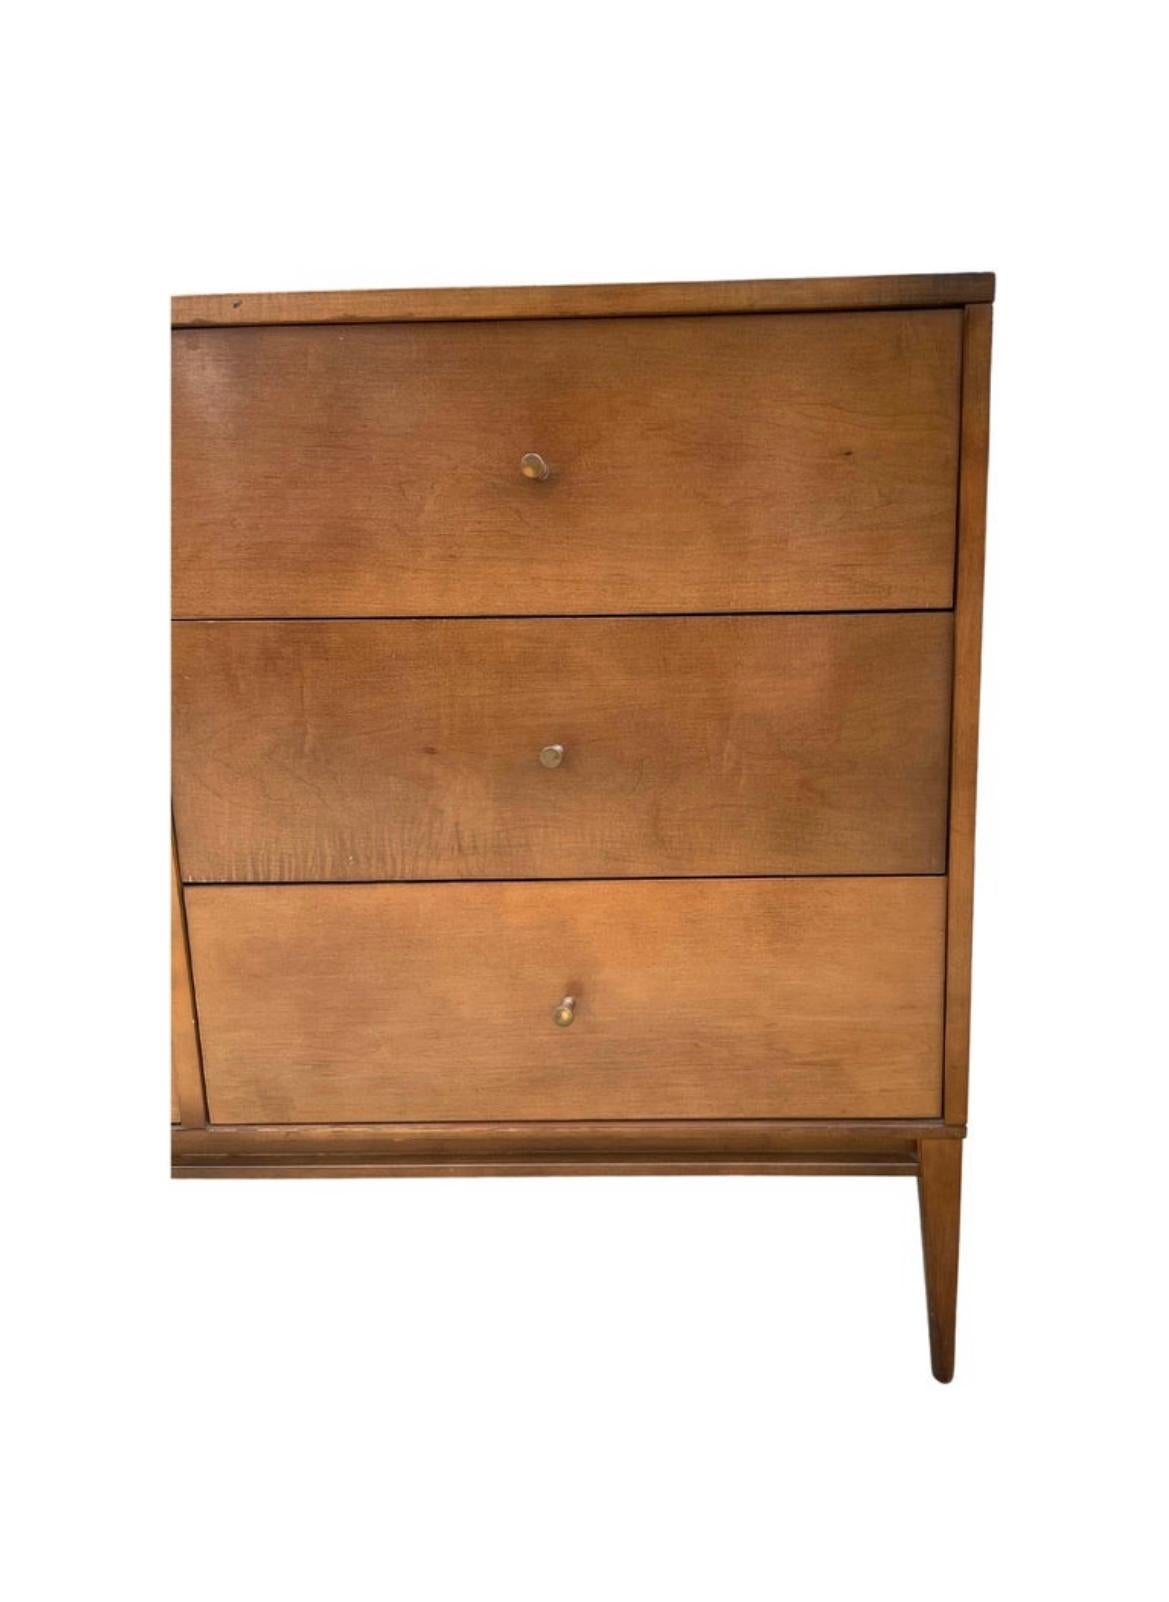 Woodwork Midcentury Paul McCobb 6 Drawer Dresser Credenza #1509 Walnut finish Brass pulls For Sale